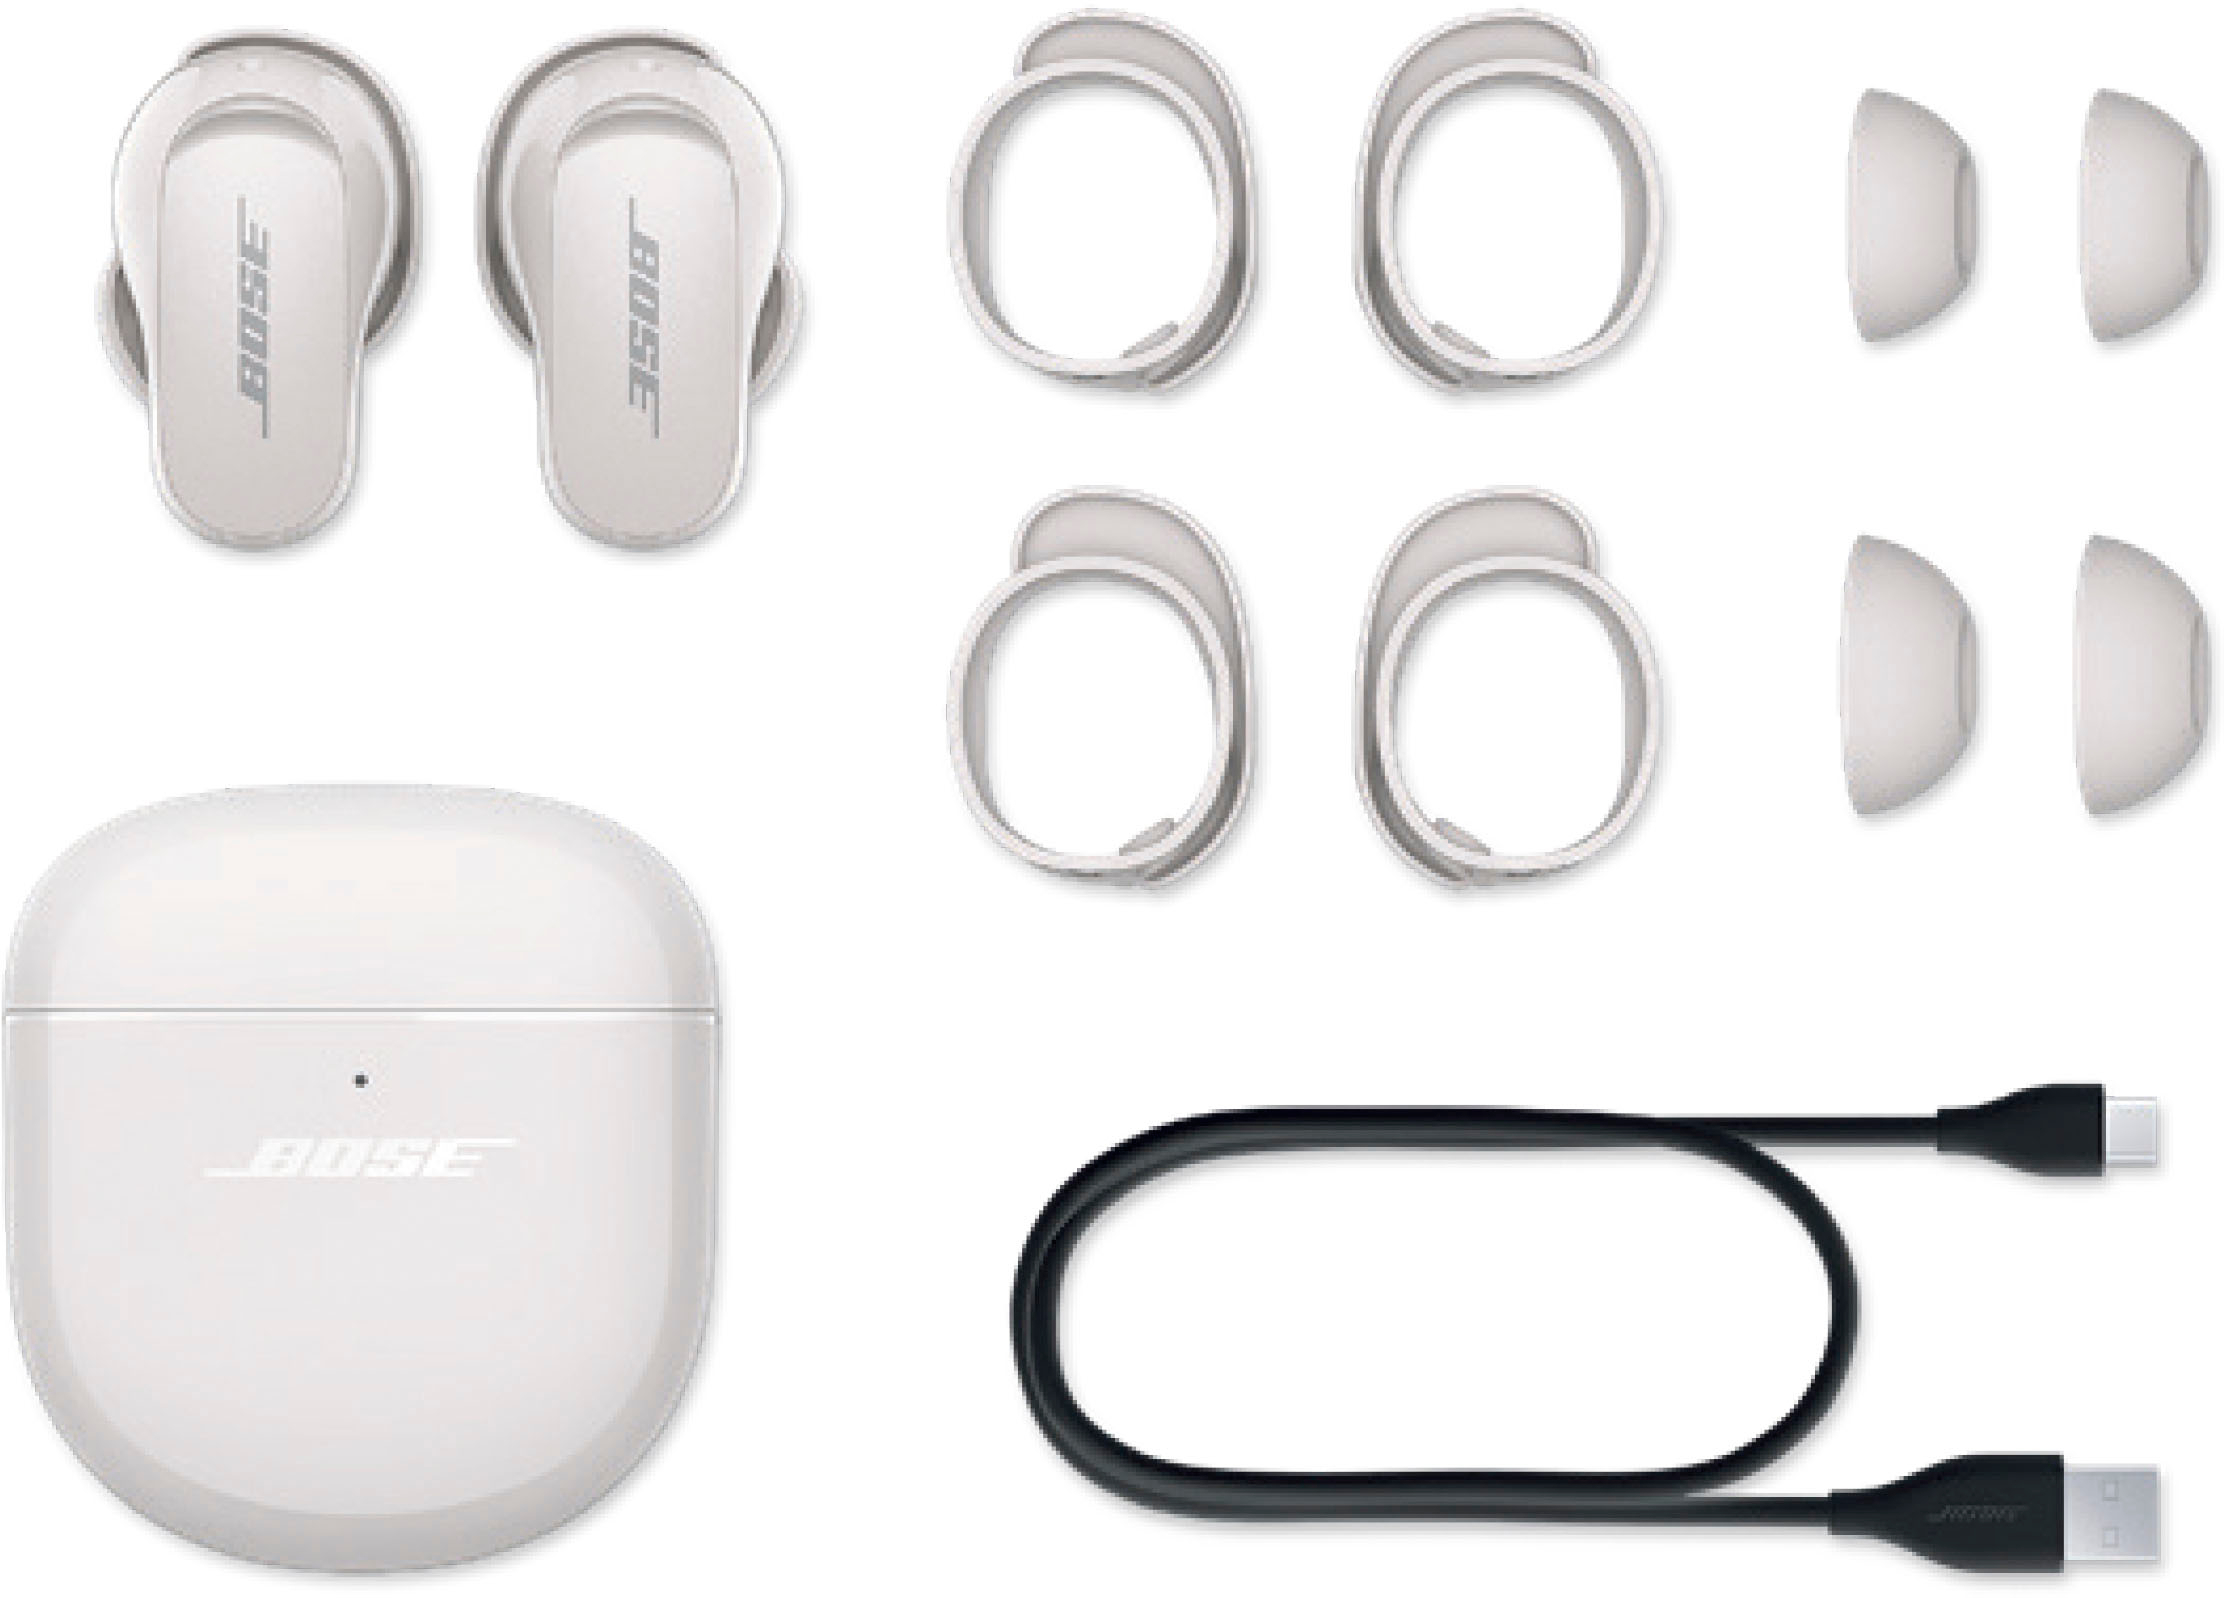 Bose QuietComfort Earbuds Noise Cancelling True Wireless Bluetooth  Headphones 